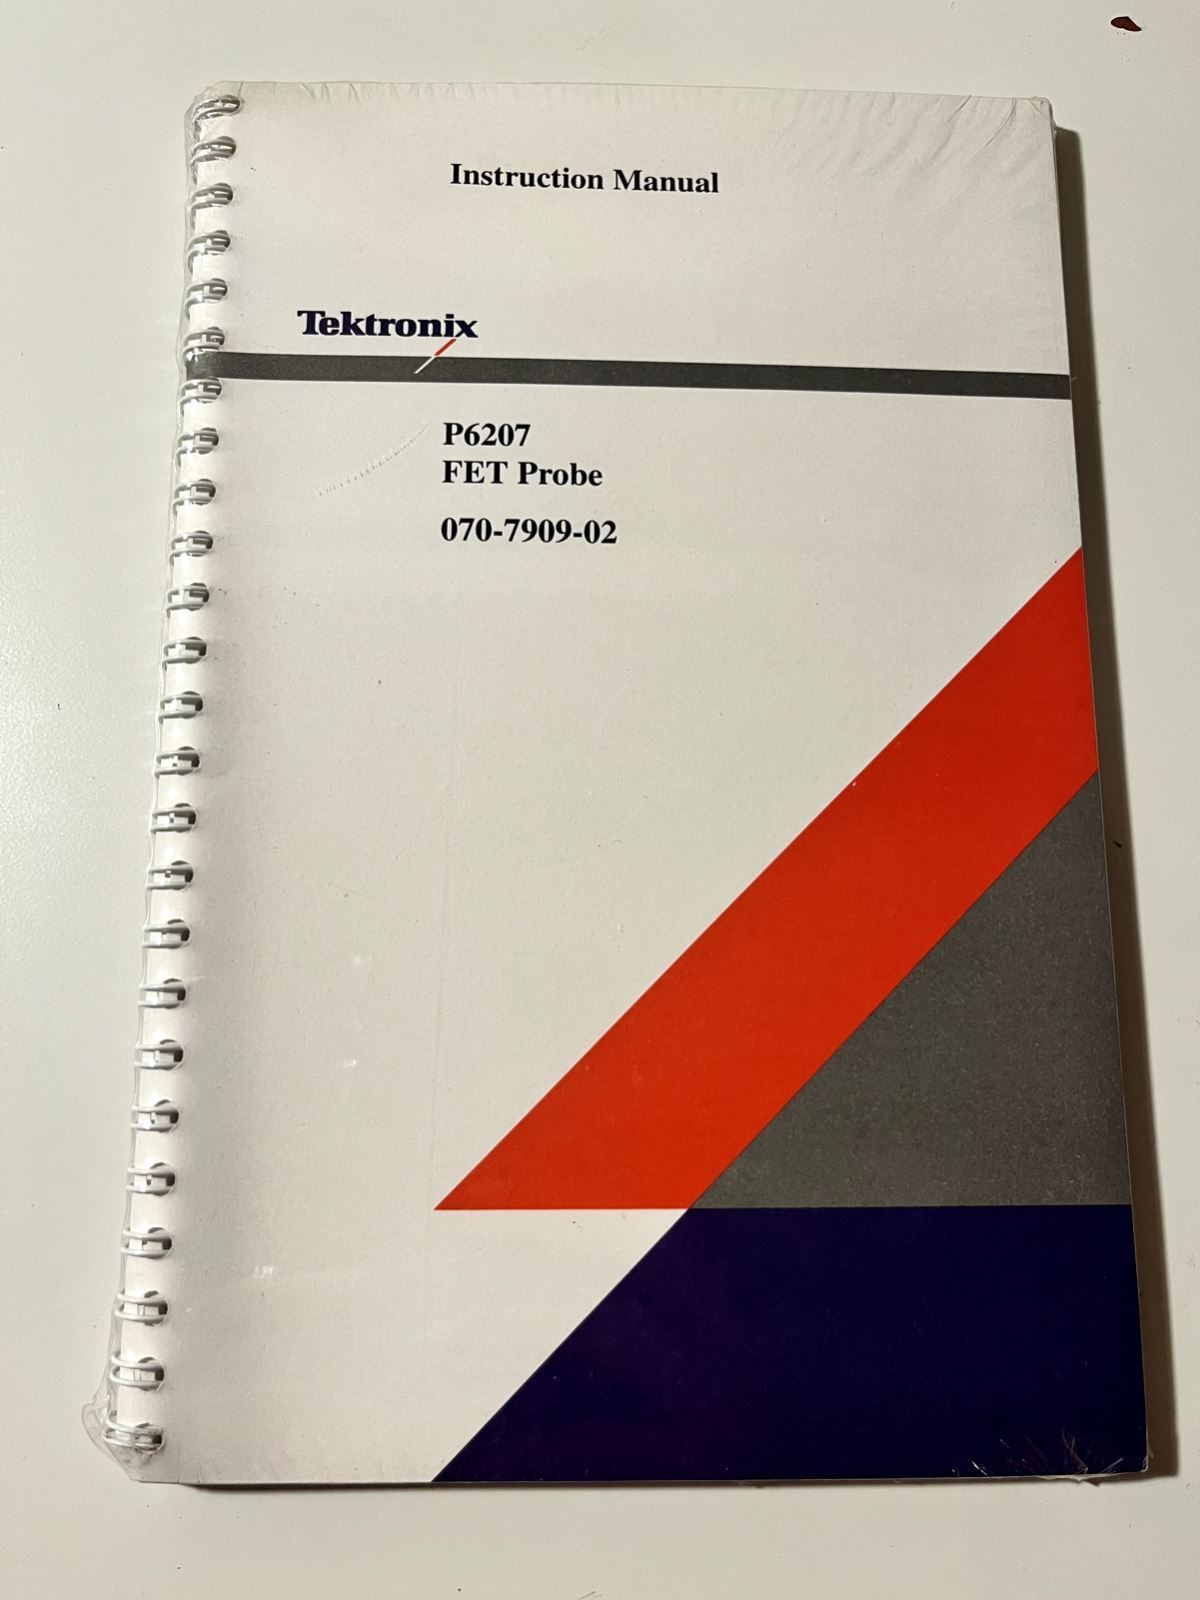 BRAND NEW Tektronix P6207 FET Probe Instruction Manual